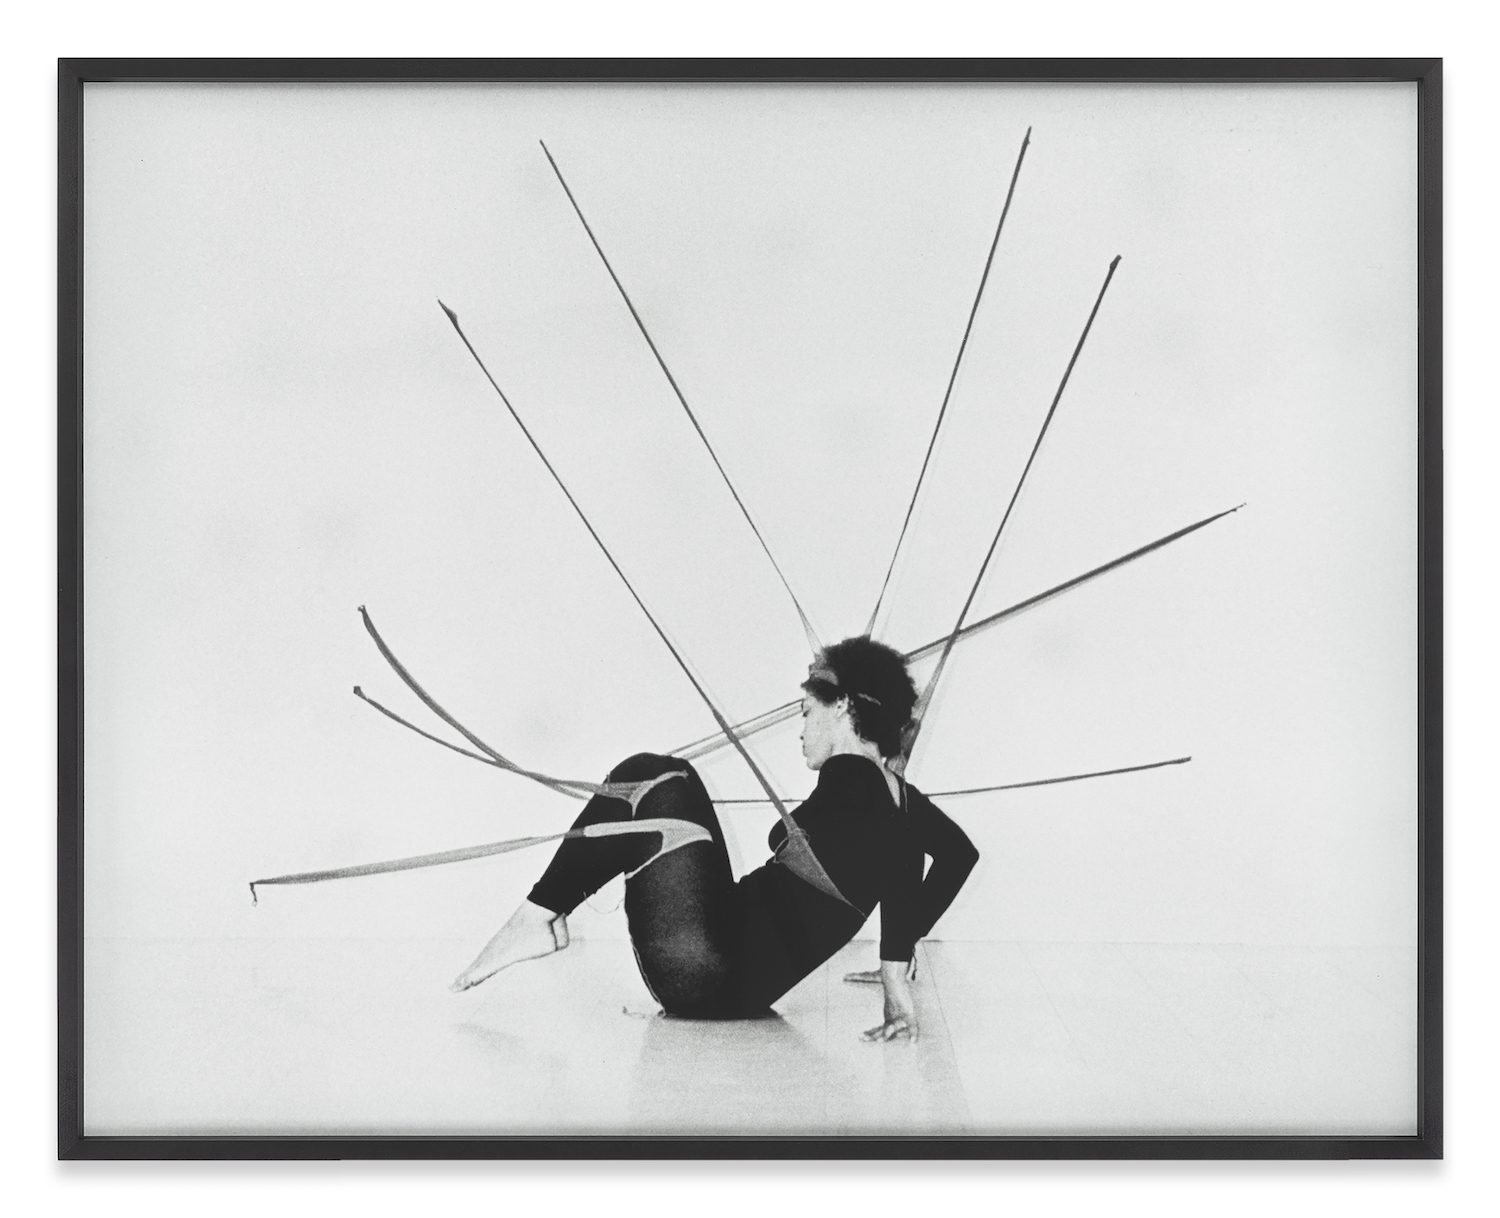 Senga Nengudi, Performance Piece, 1978